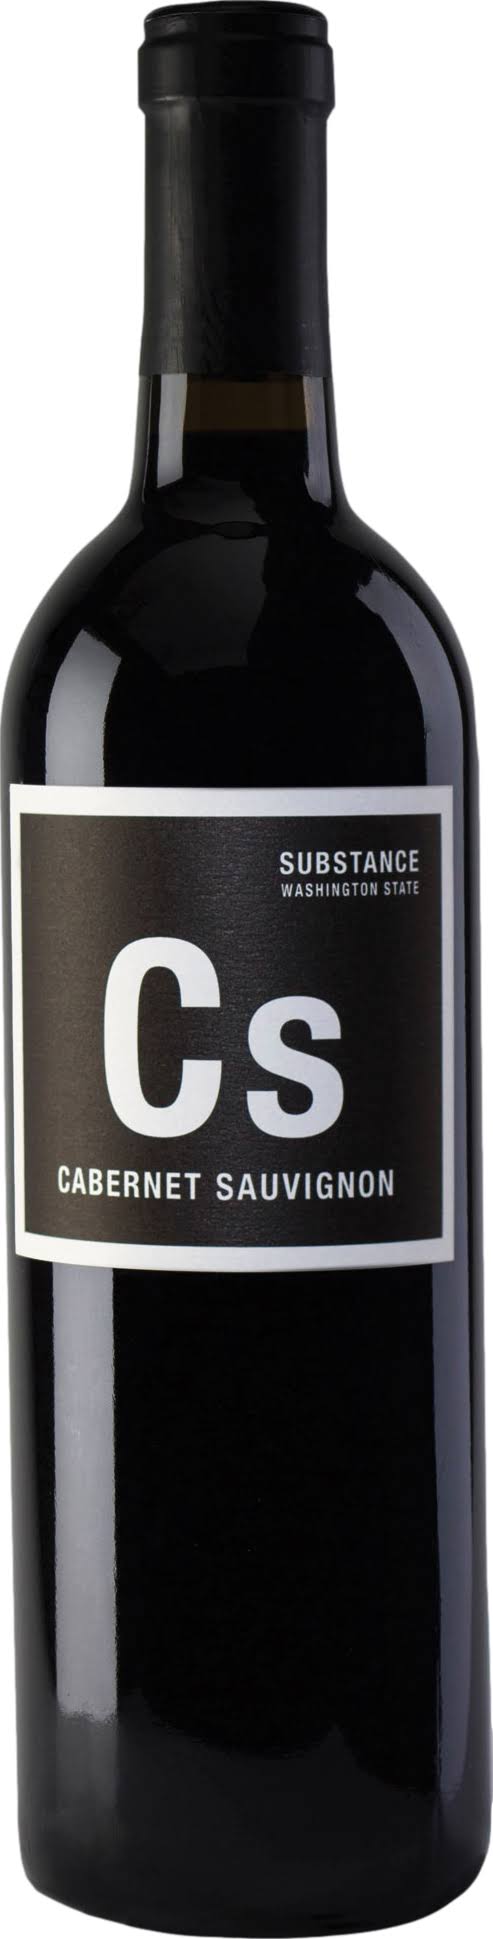 Cabernet Sauvignon Wine - Washington, Usa